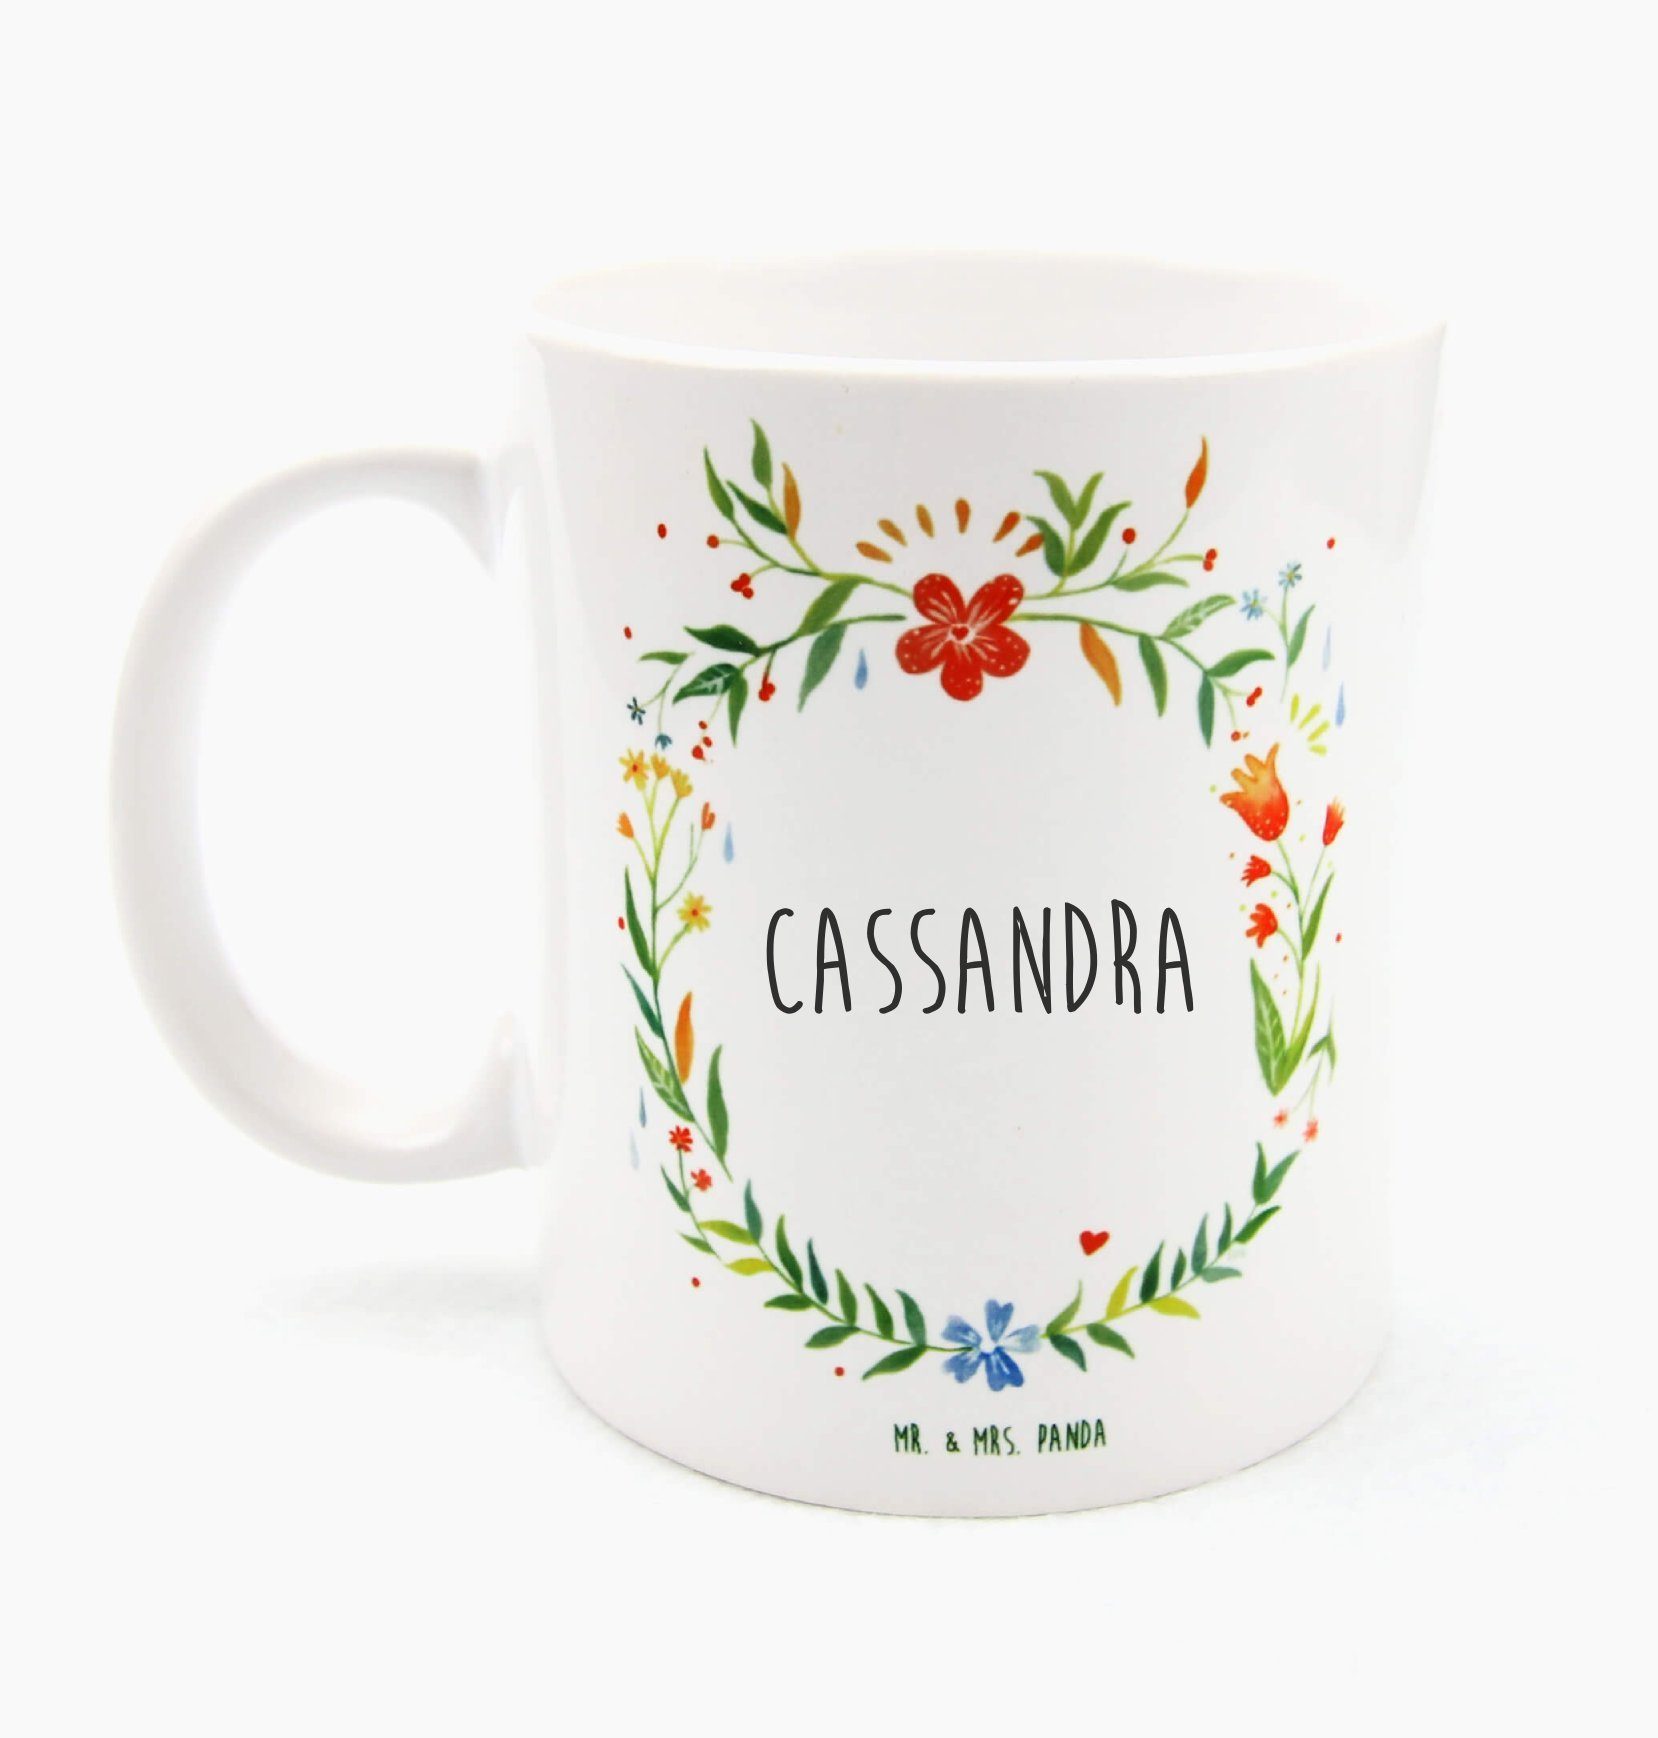 Mr. & Mrs. Panda Tasse Cassandra - Geschenk, Tasse Motive, Geschenk Tasse, Kaffeetasse, Tass, Keramik | Tassen